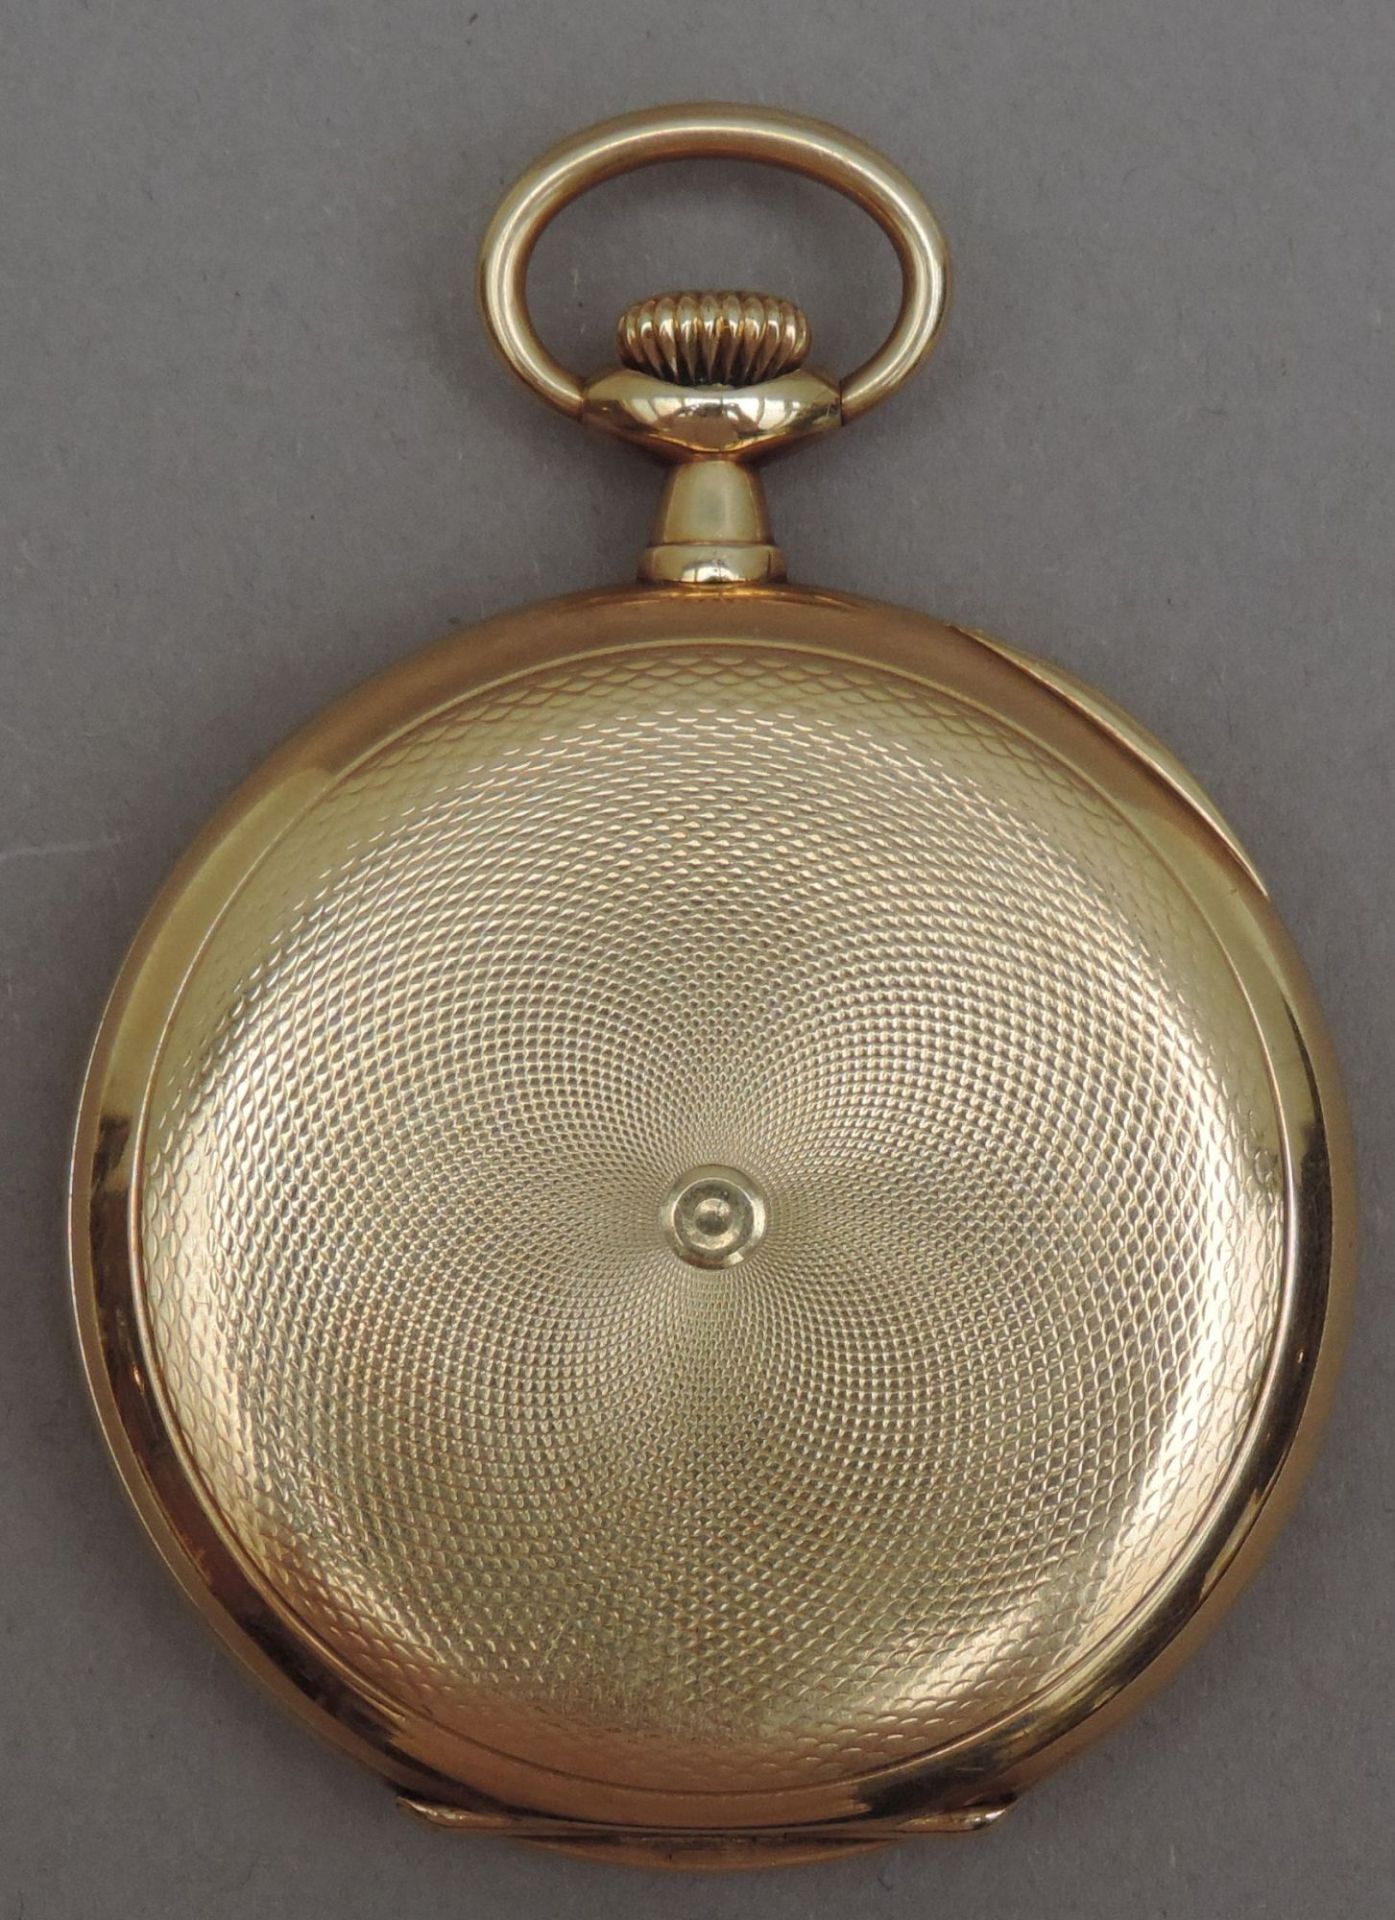 HERRENSAVONETTE, Patek Philippe, Genf, Chronograph, 1910-1915, Dm 50 mm, mit Krone 61 mm, 585- - Image 2 of 6